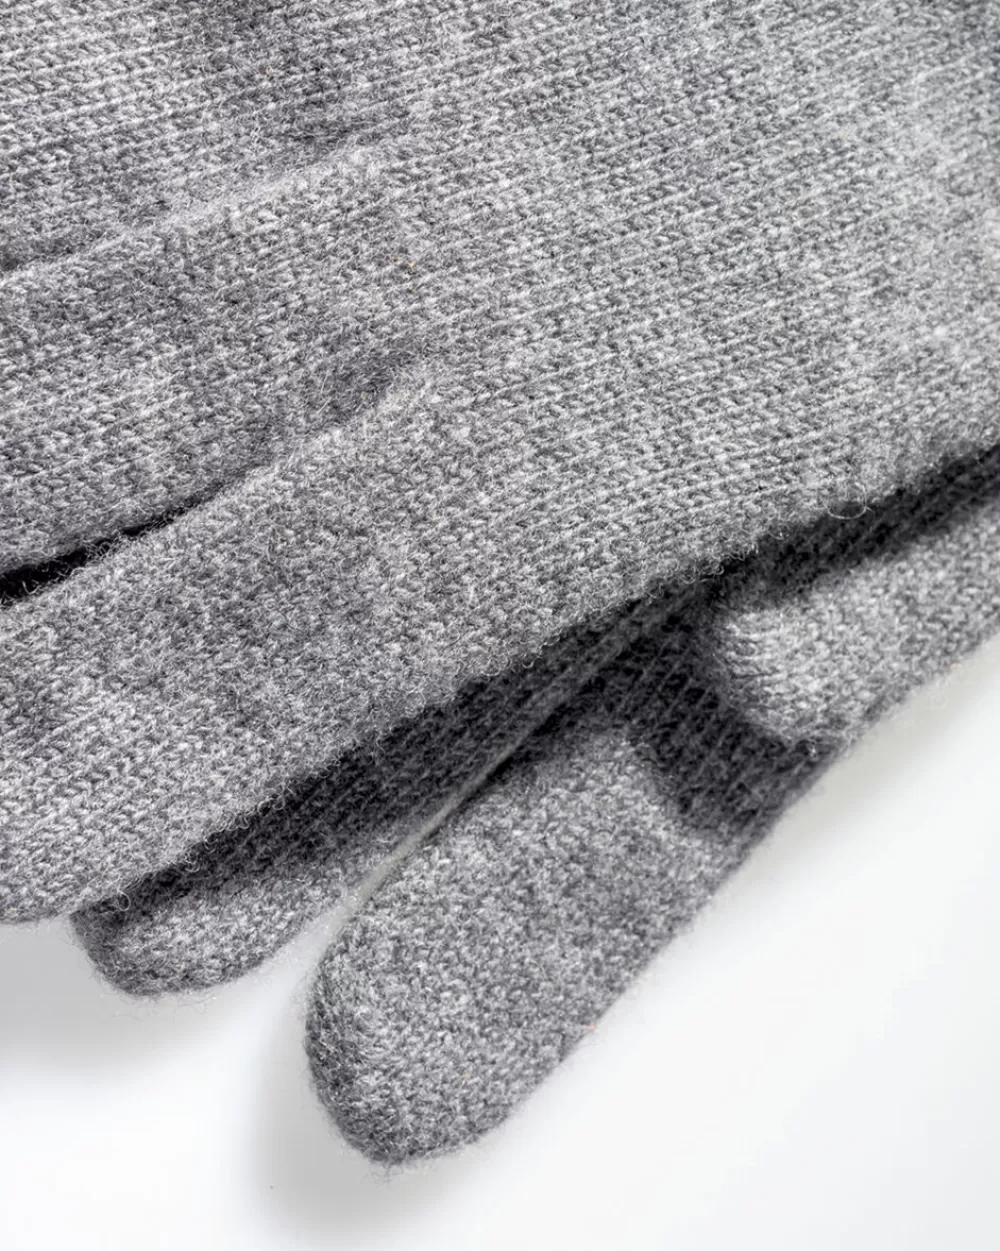 Gloves wool *Floris van Bommel Clearance